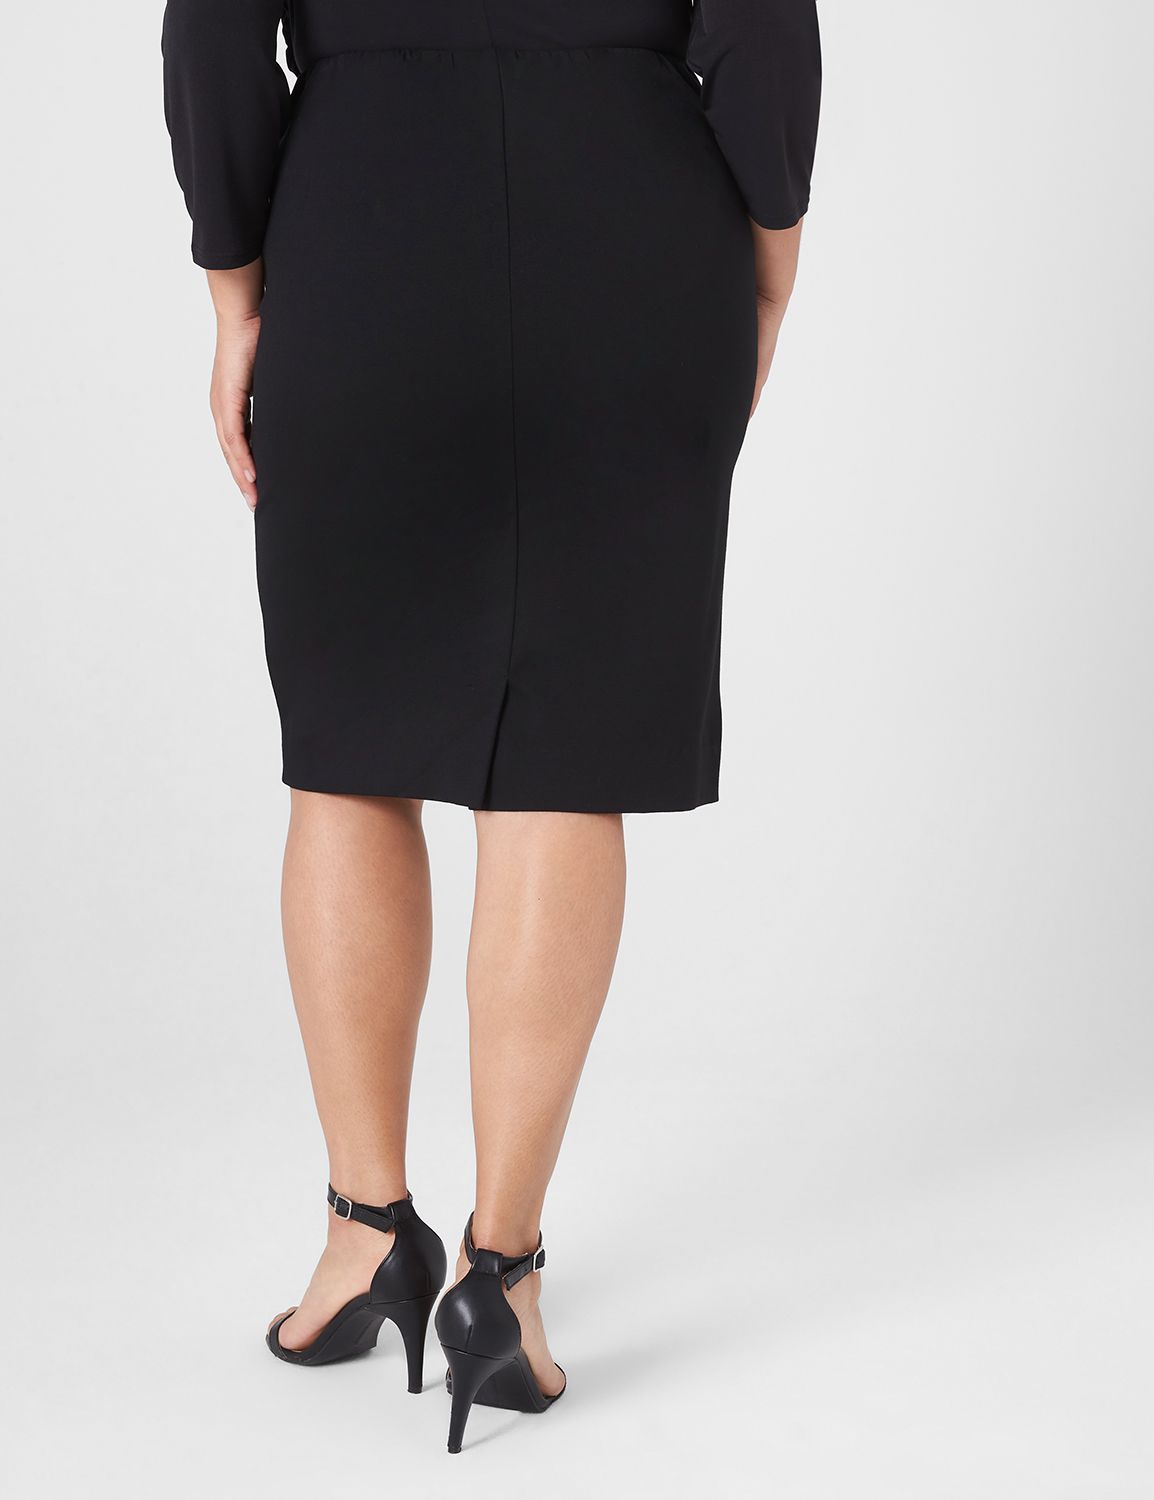 Black Pencil Skirt (3089356)